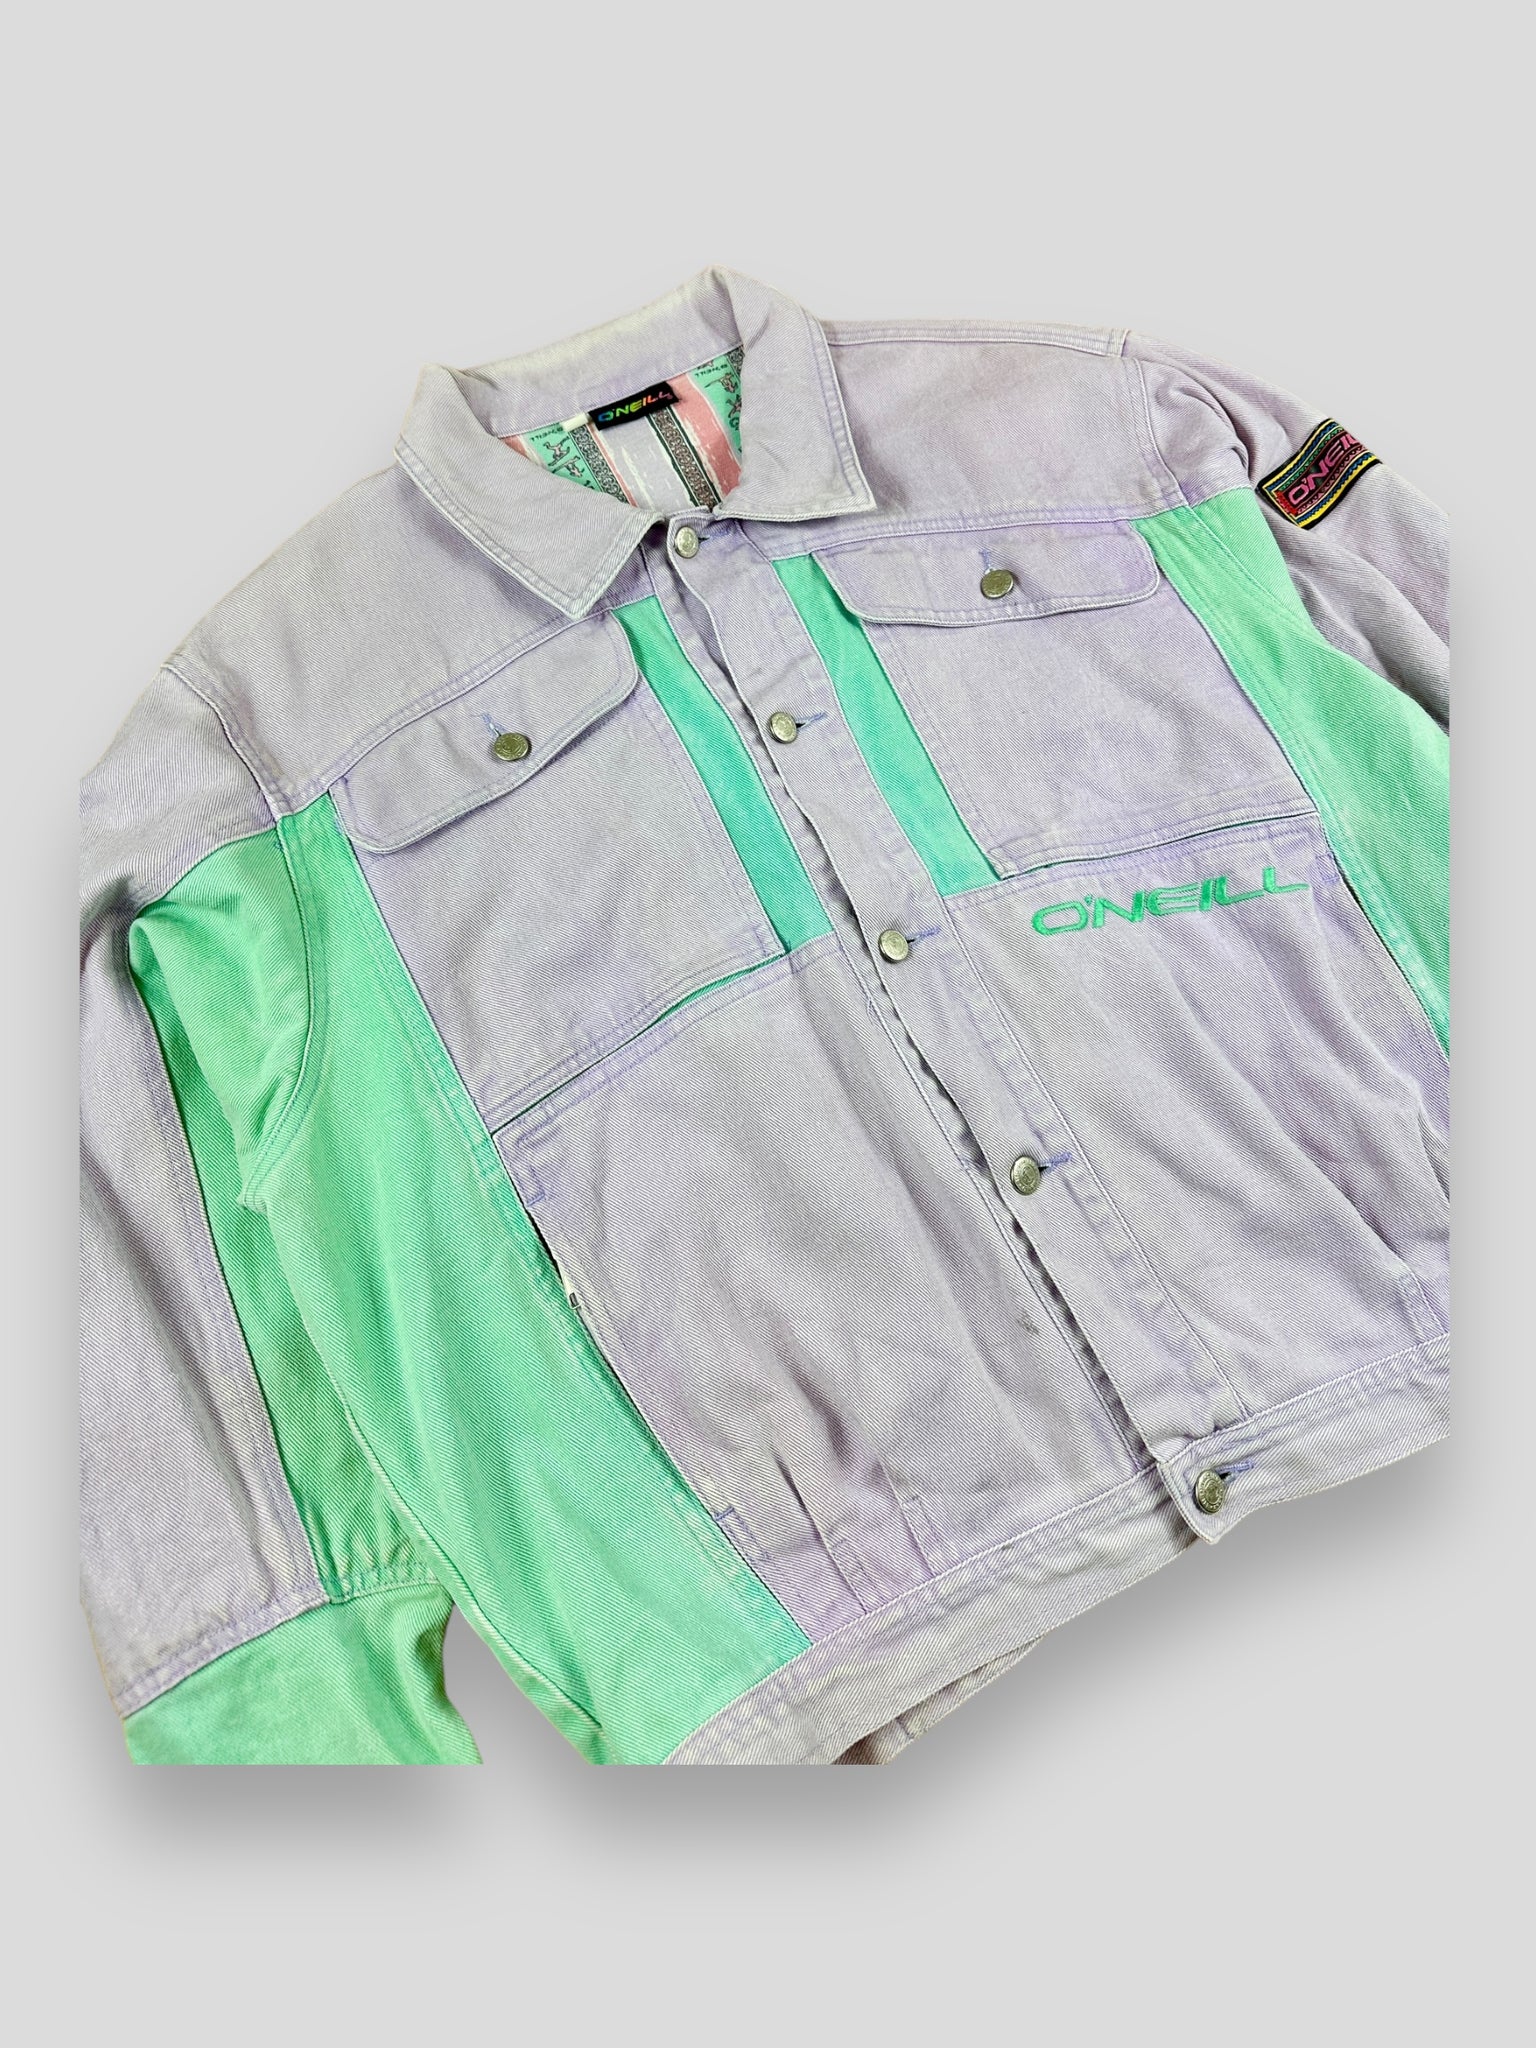 Vintage oneill purple and green denim jacket